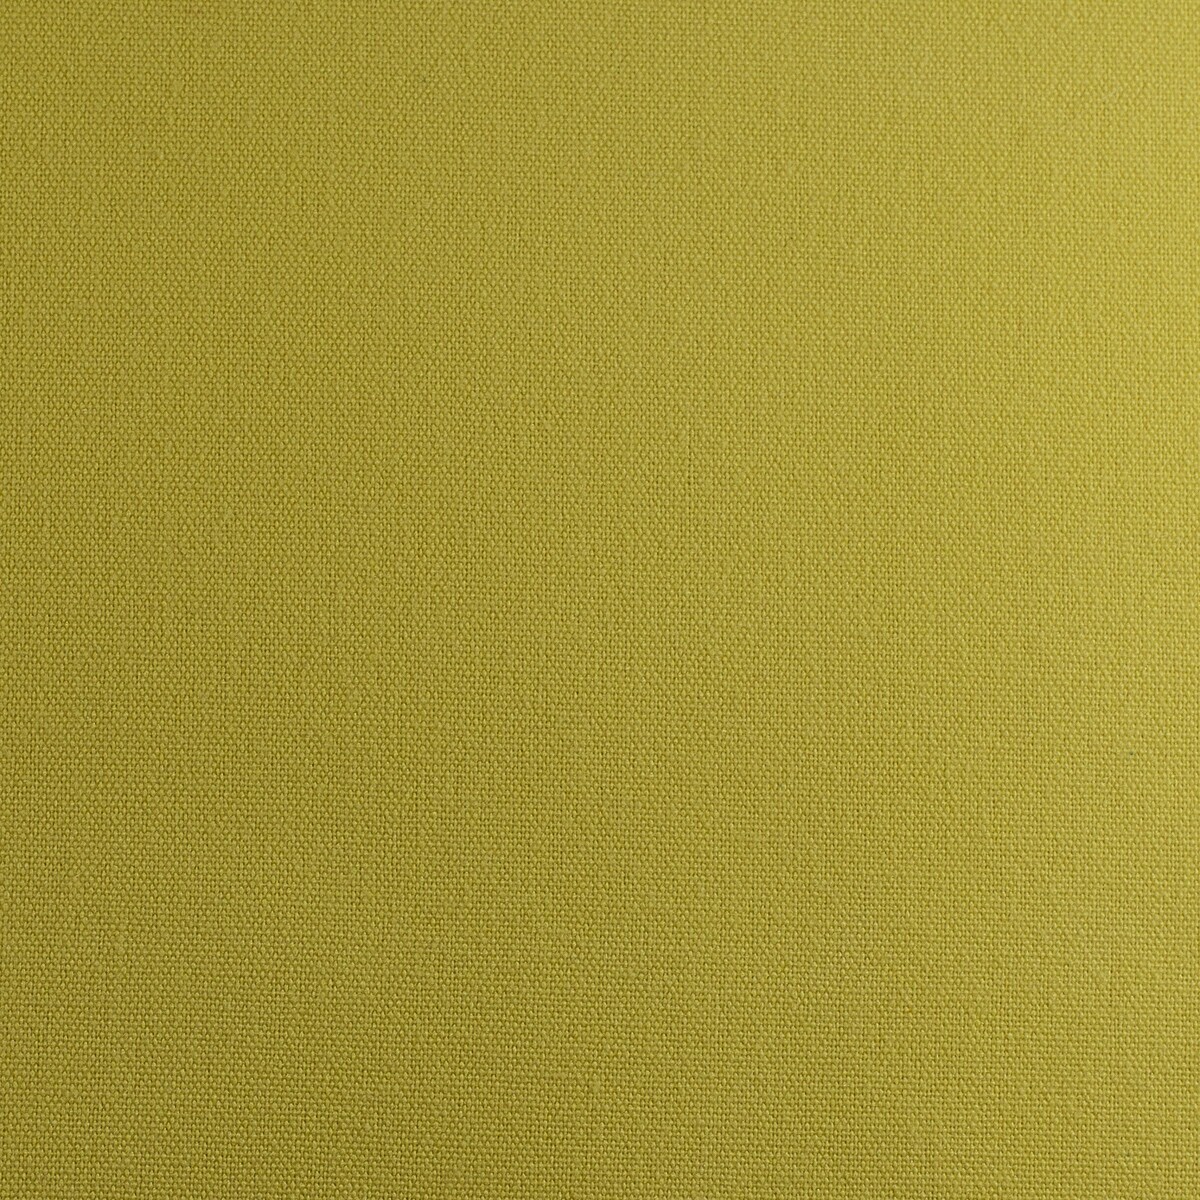 Lemon Yellow Solid